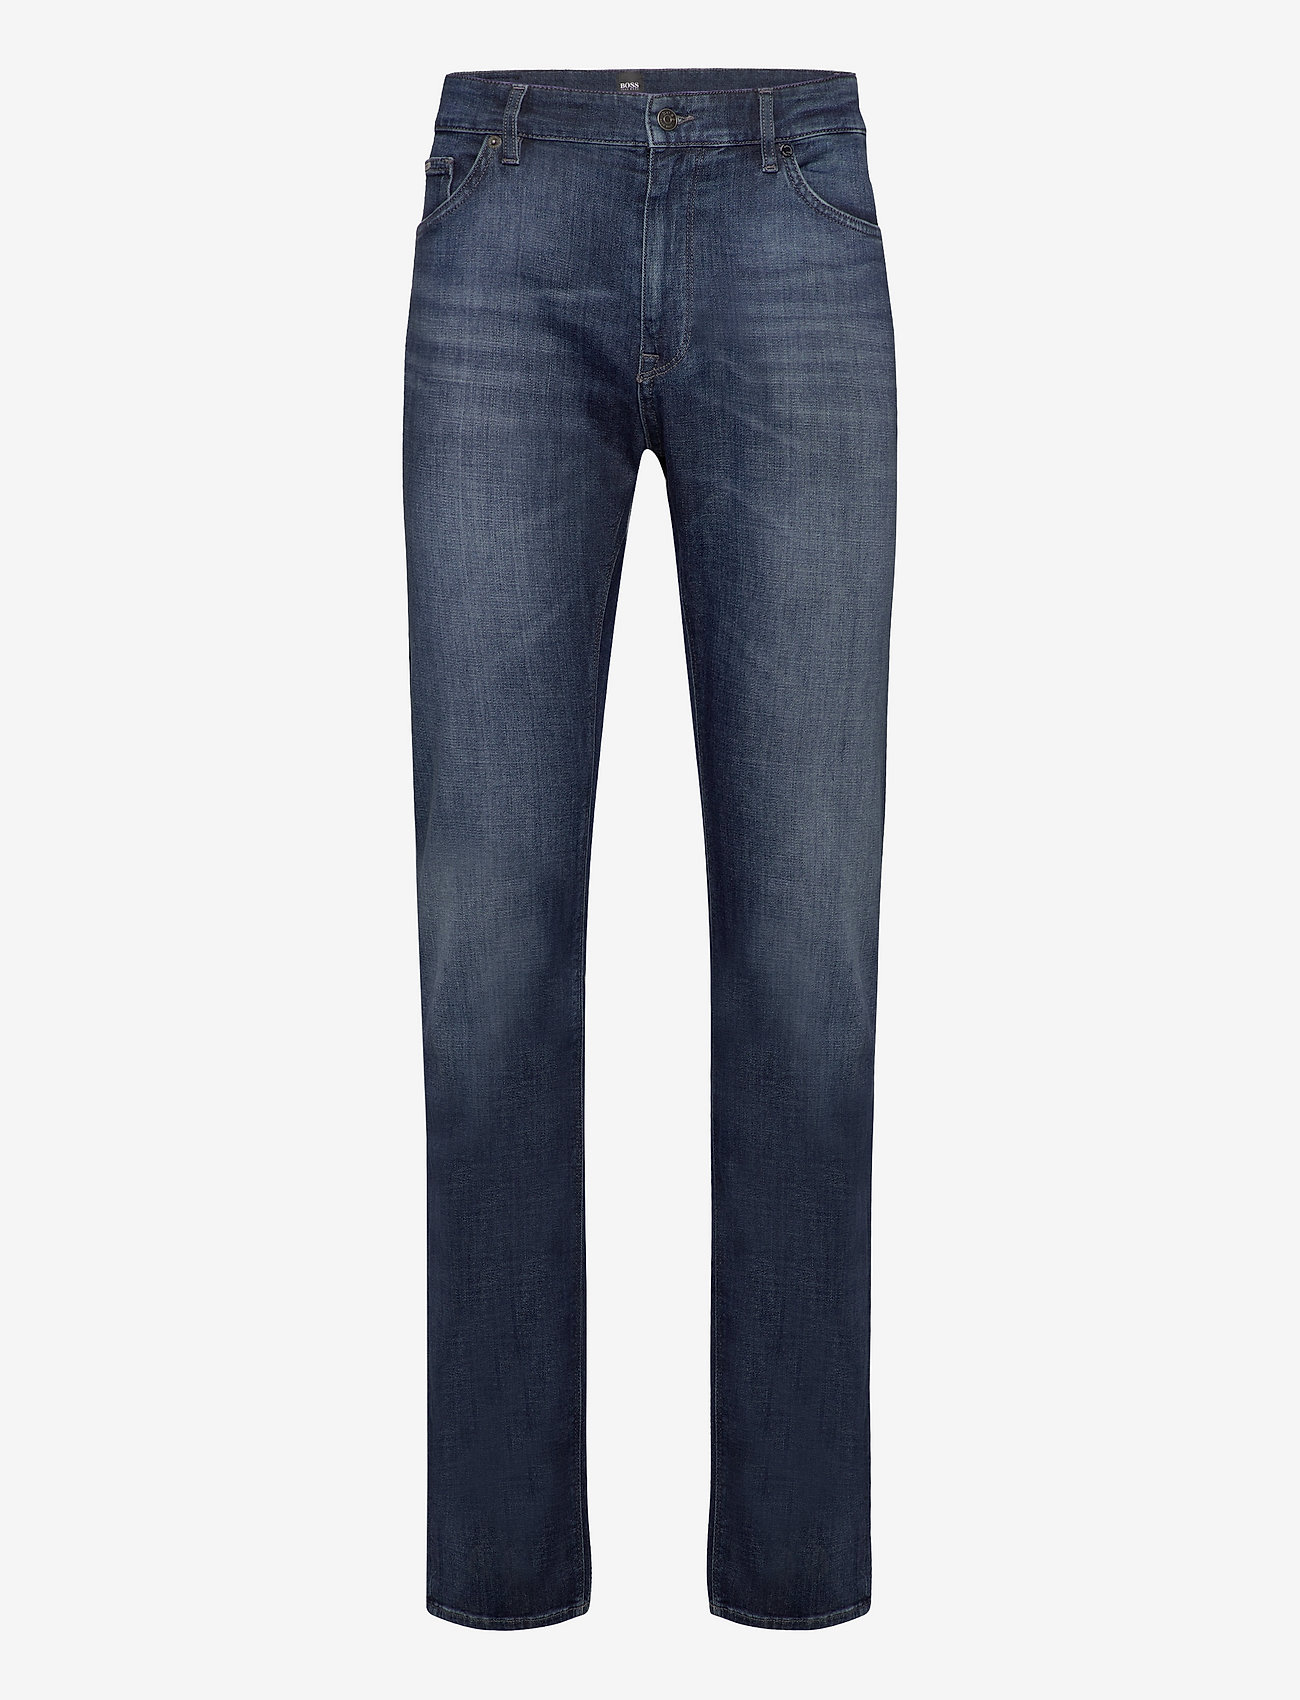 Maine3 - Regular jeans |